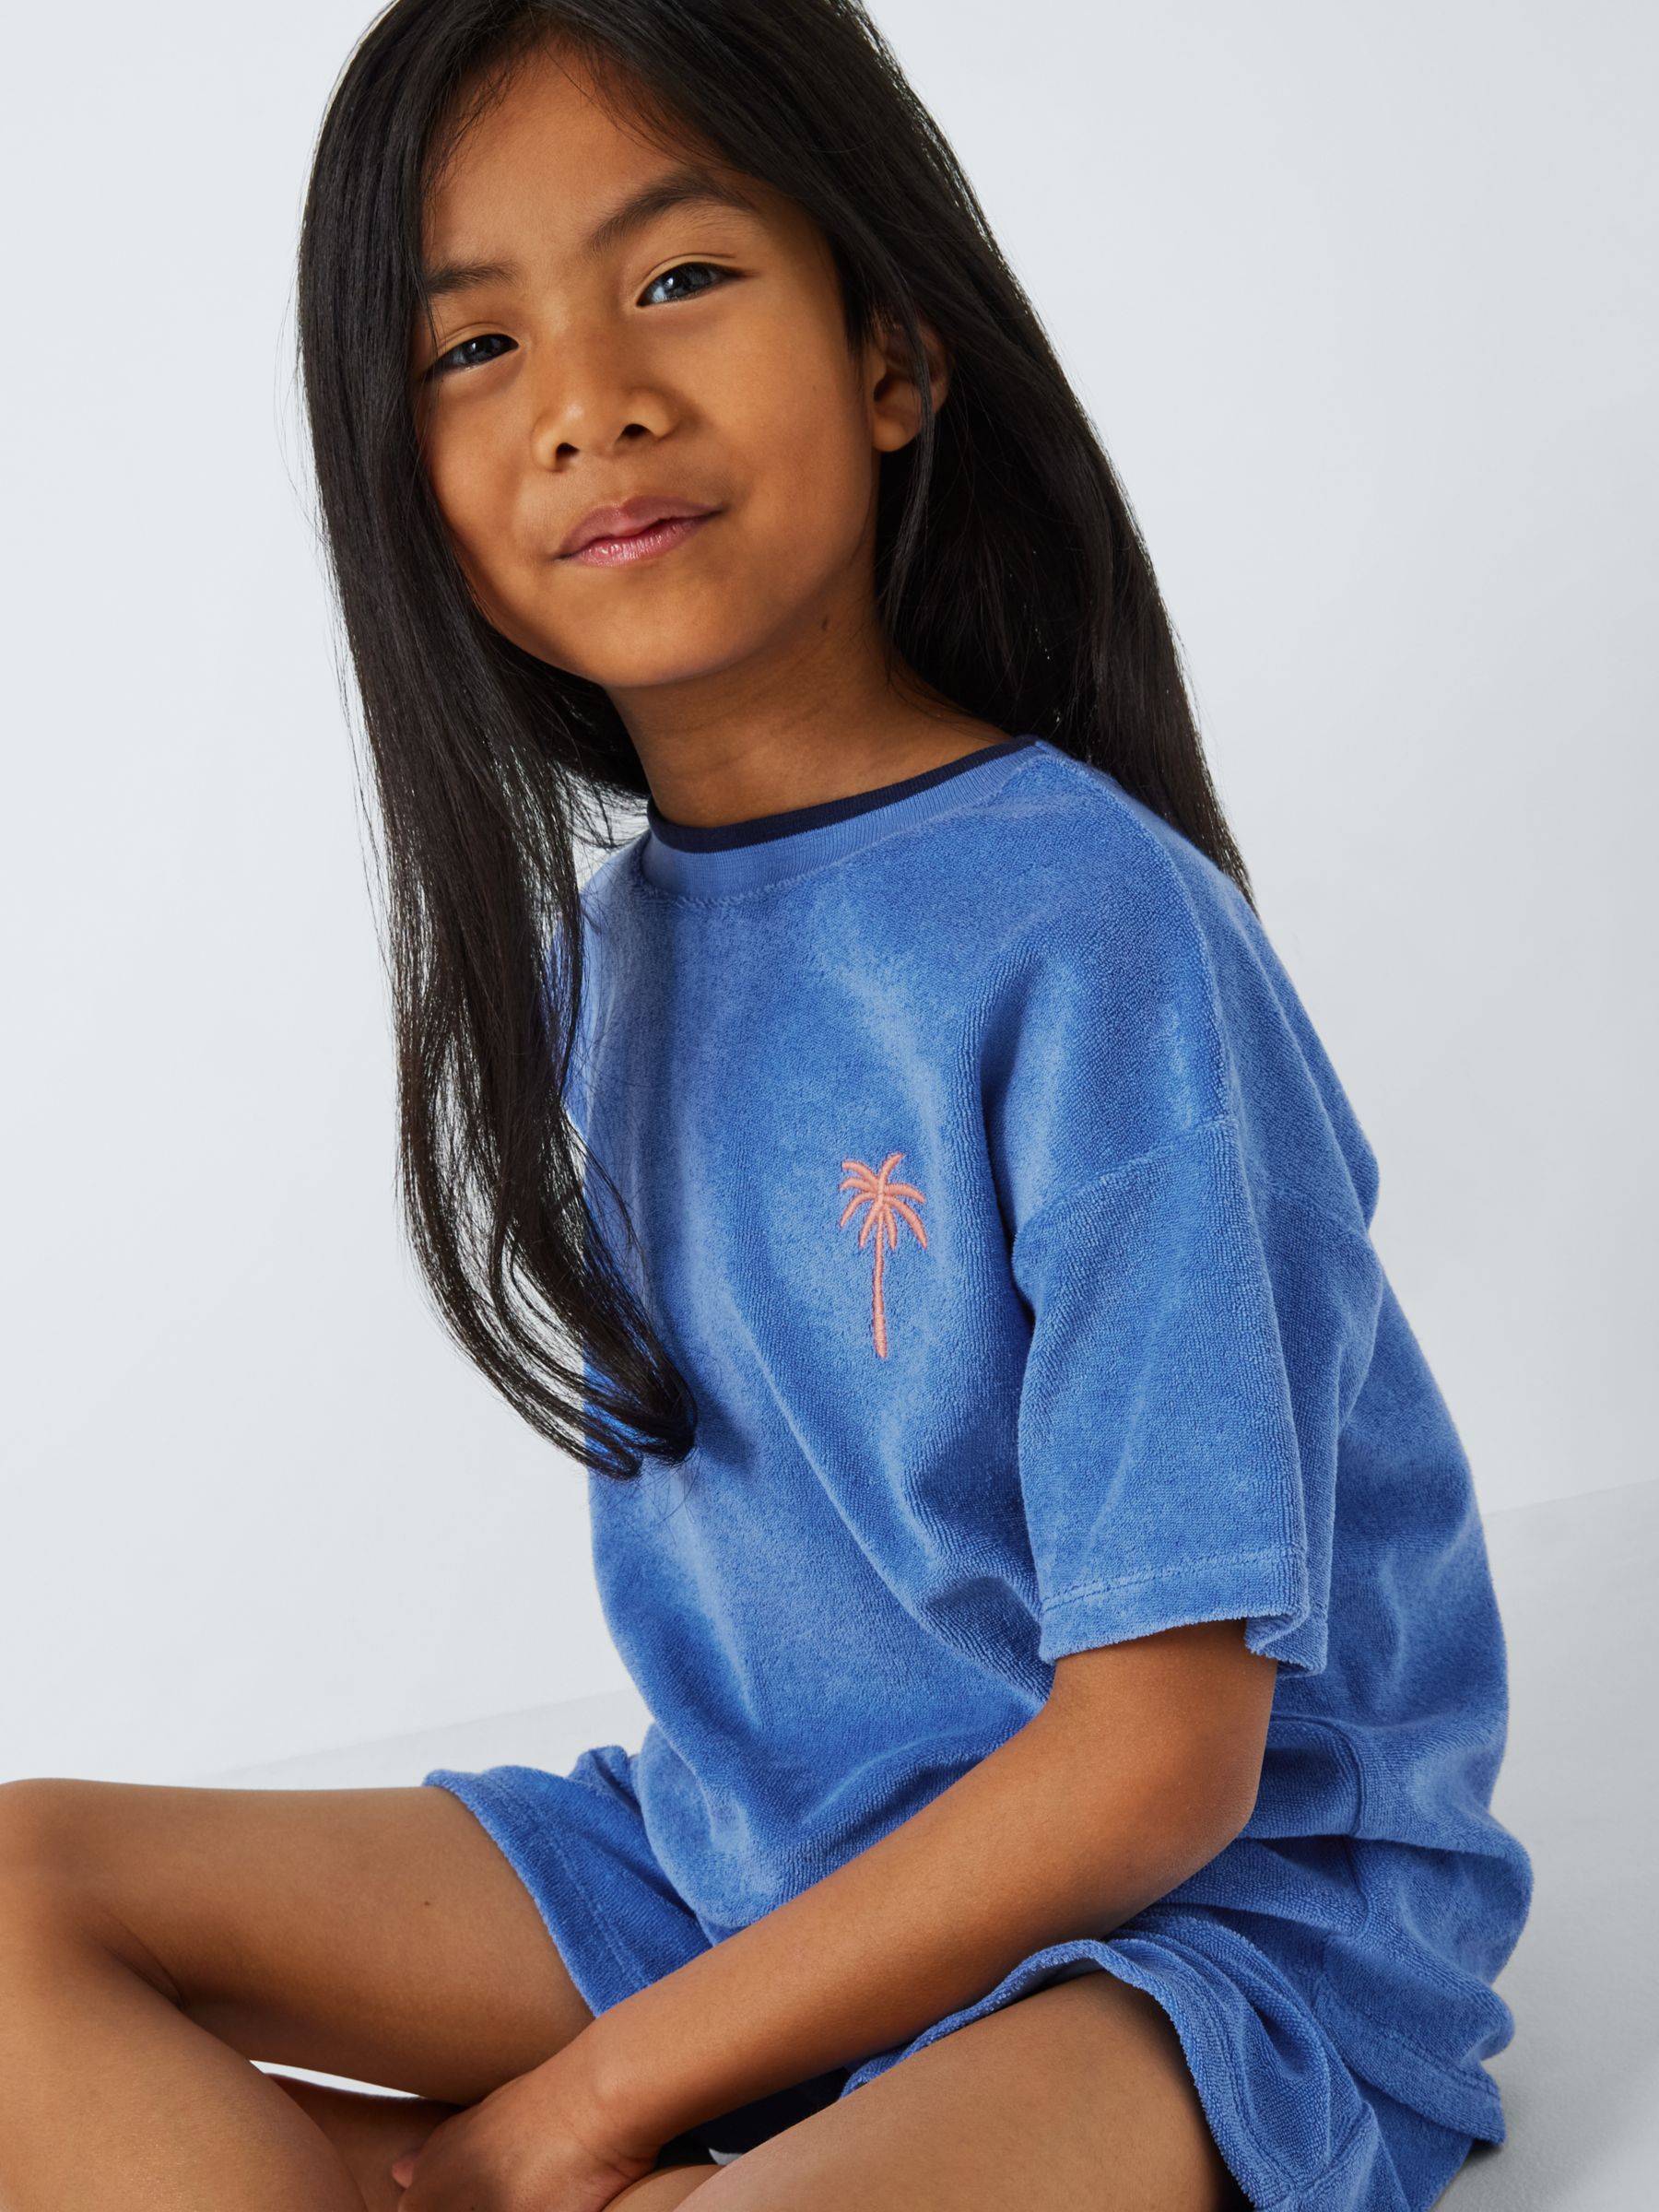 Buy John Lewis Kids' Towelling Lounge Shortie Pyjamas, Blue Online at johnlewis.com